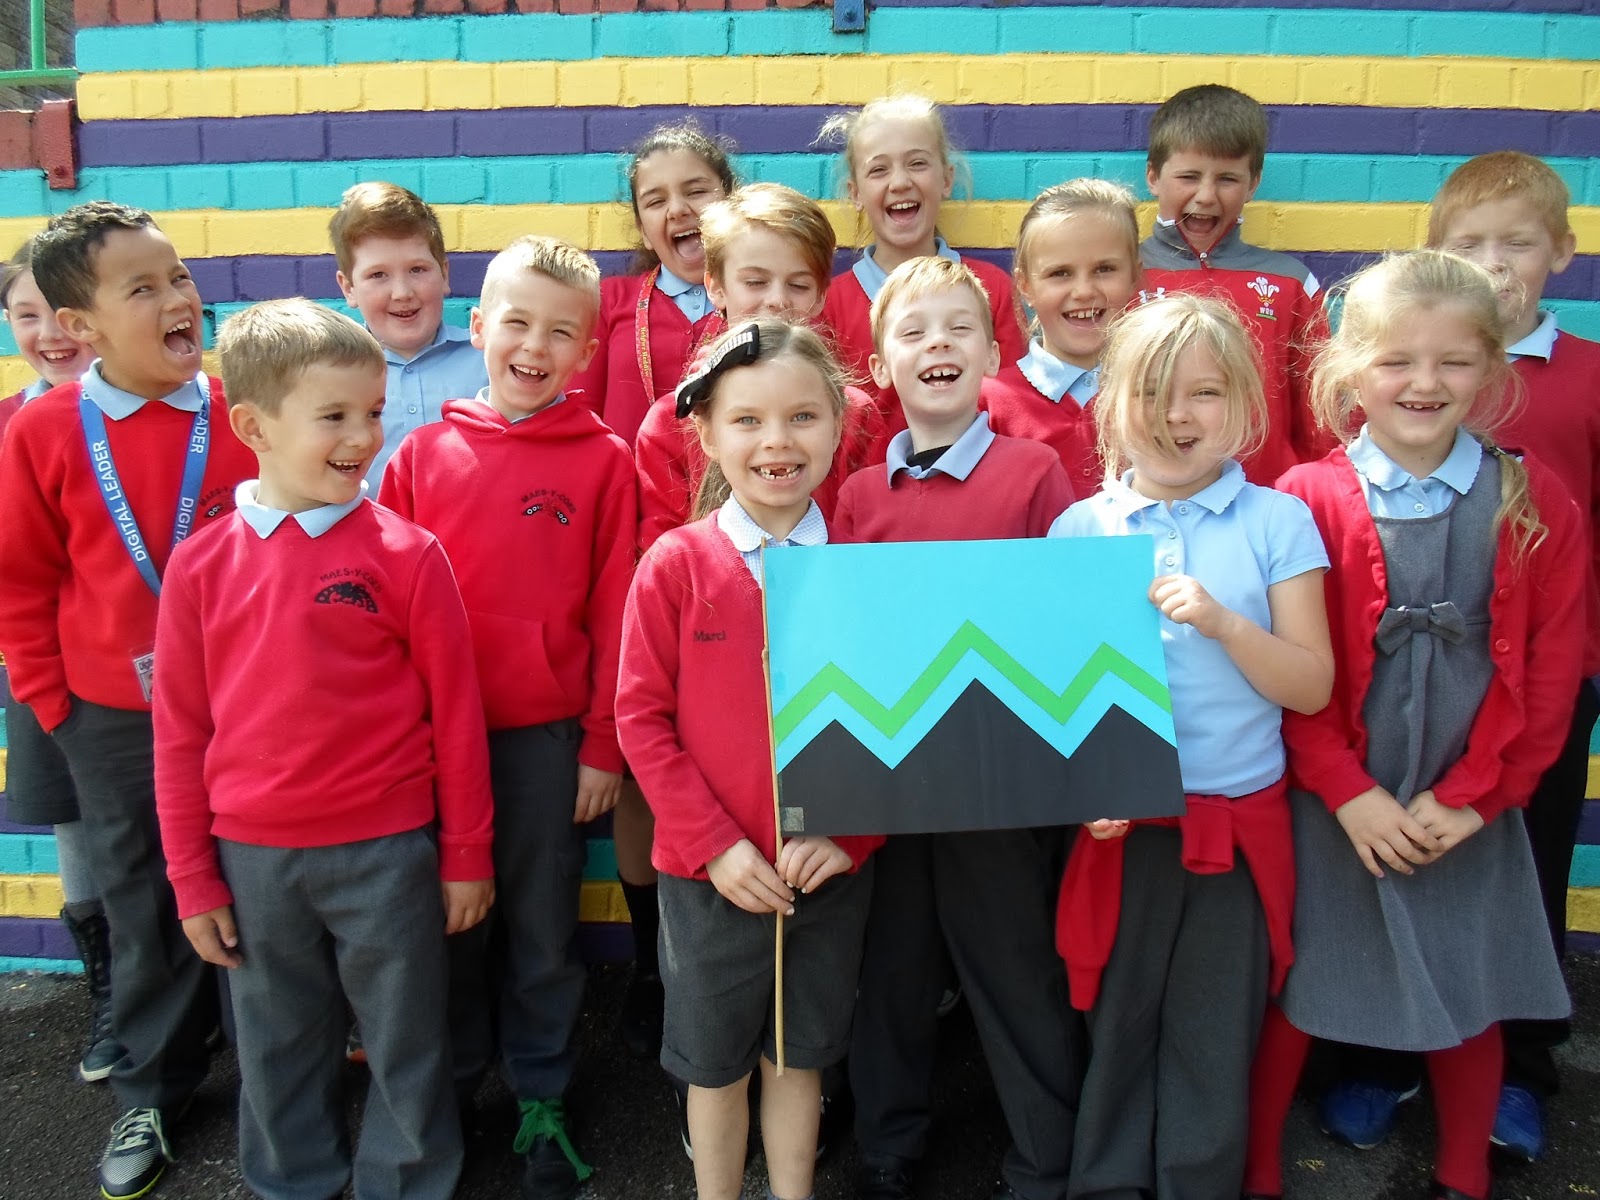 Ysgol Maes-y-coed School: Our Flag has Travelled to London!